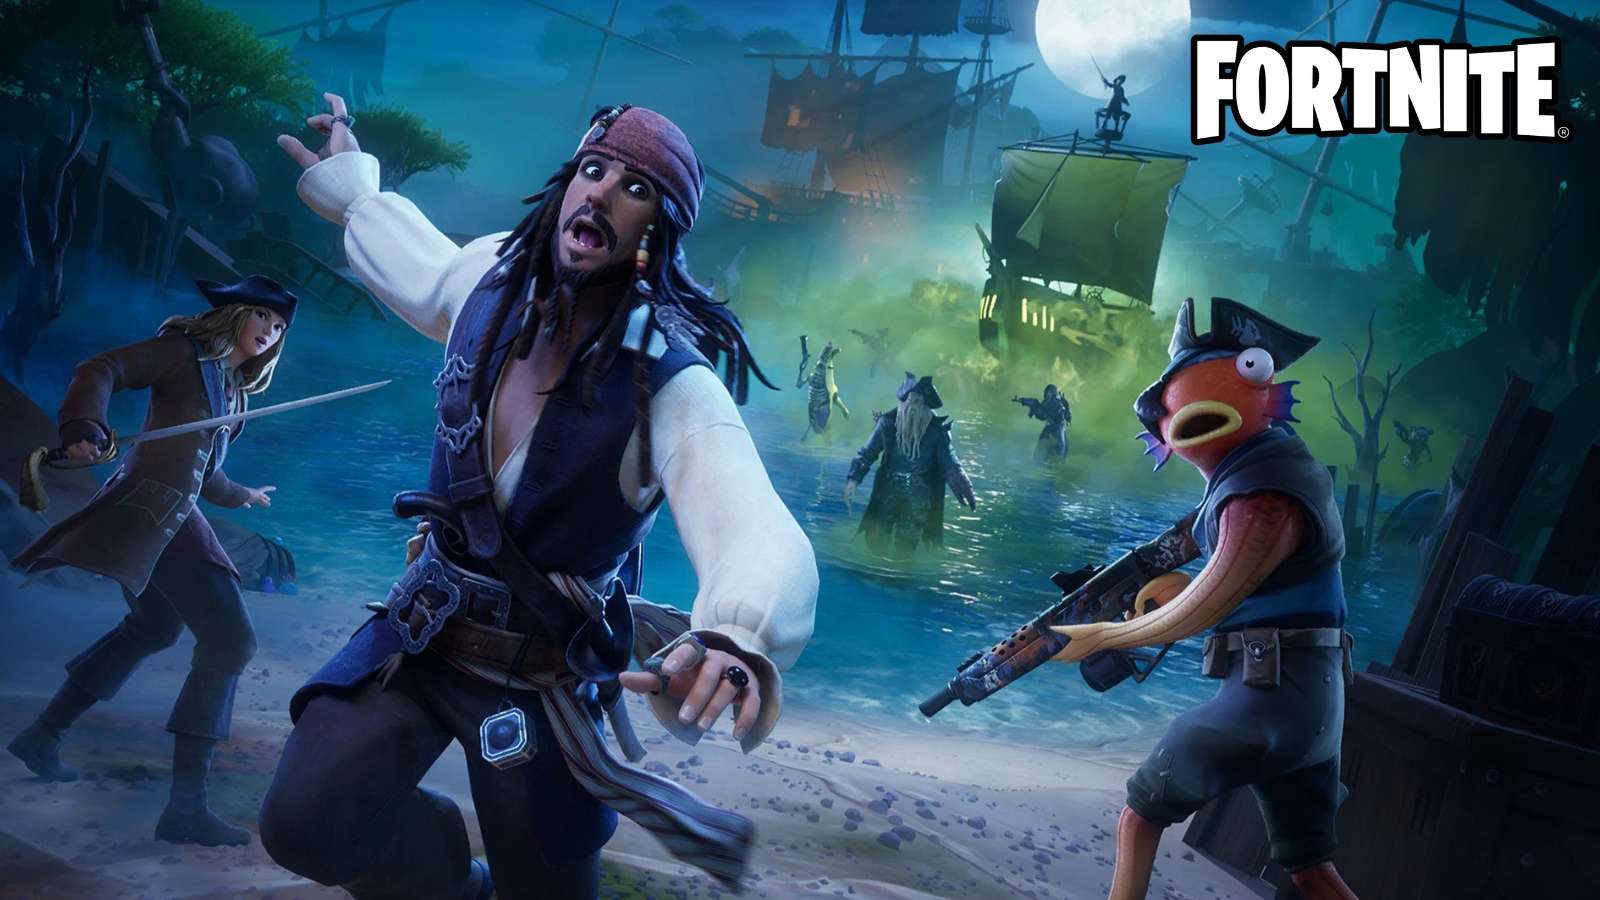 Pirates collab in Fortnite